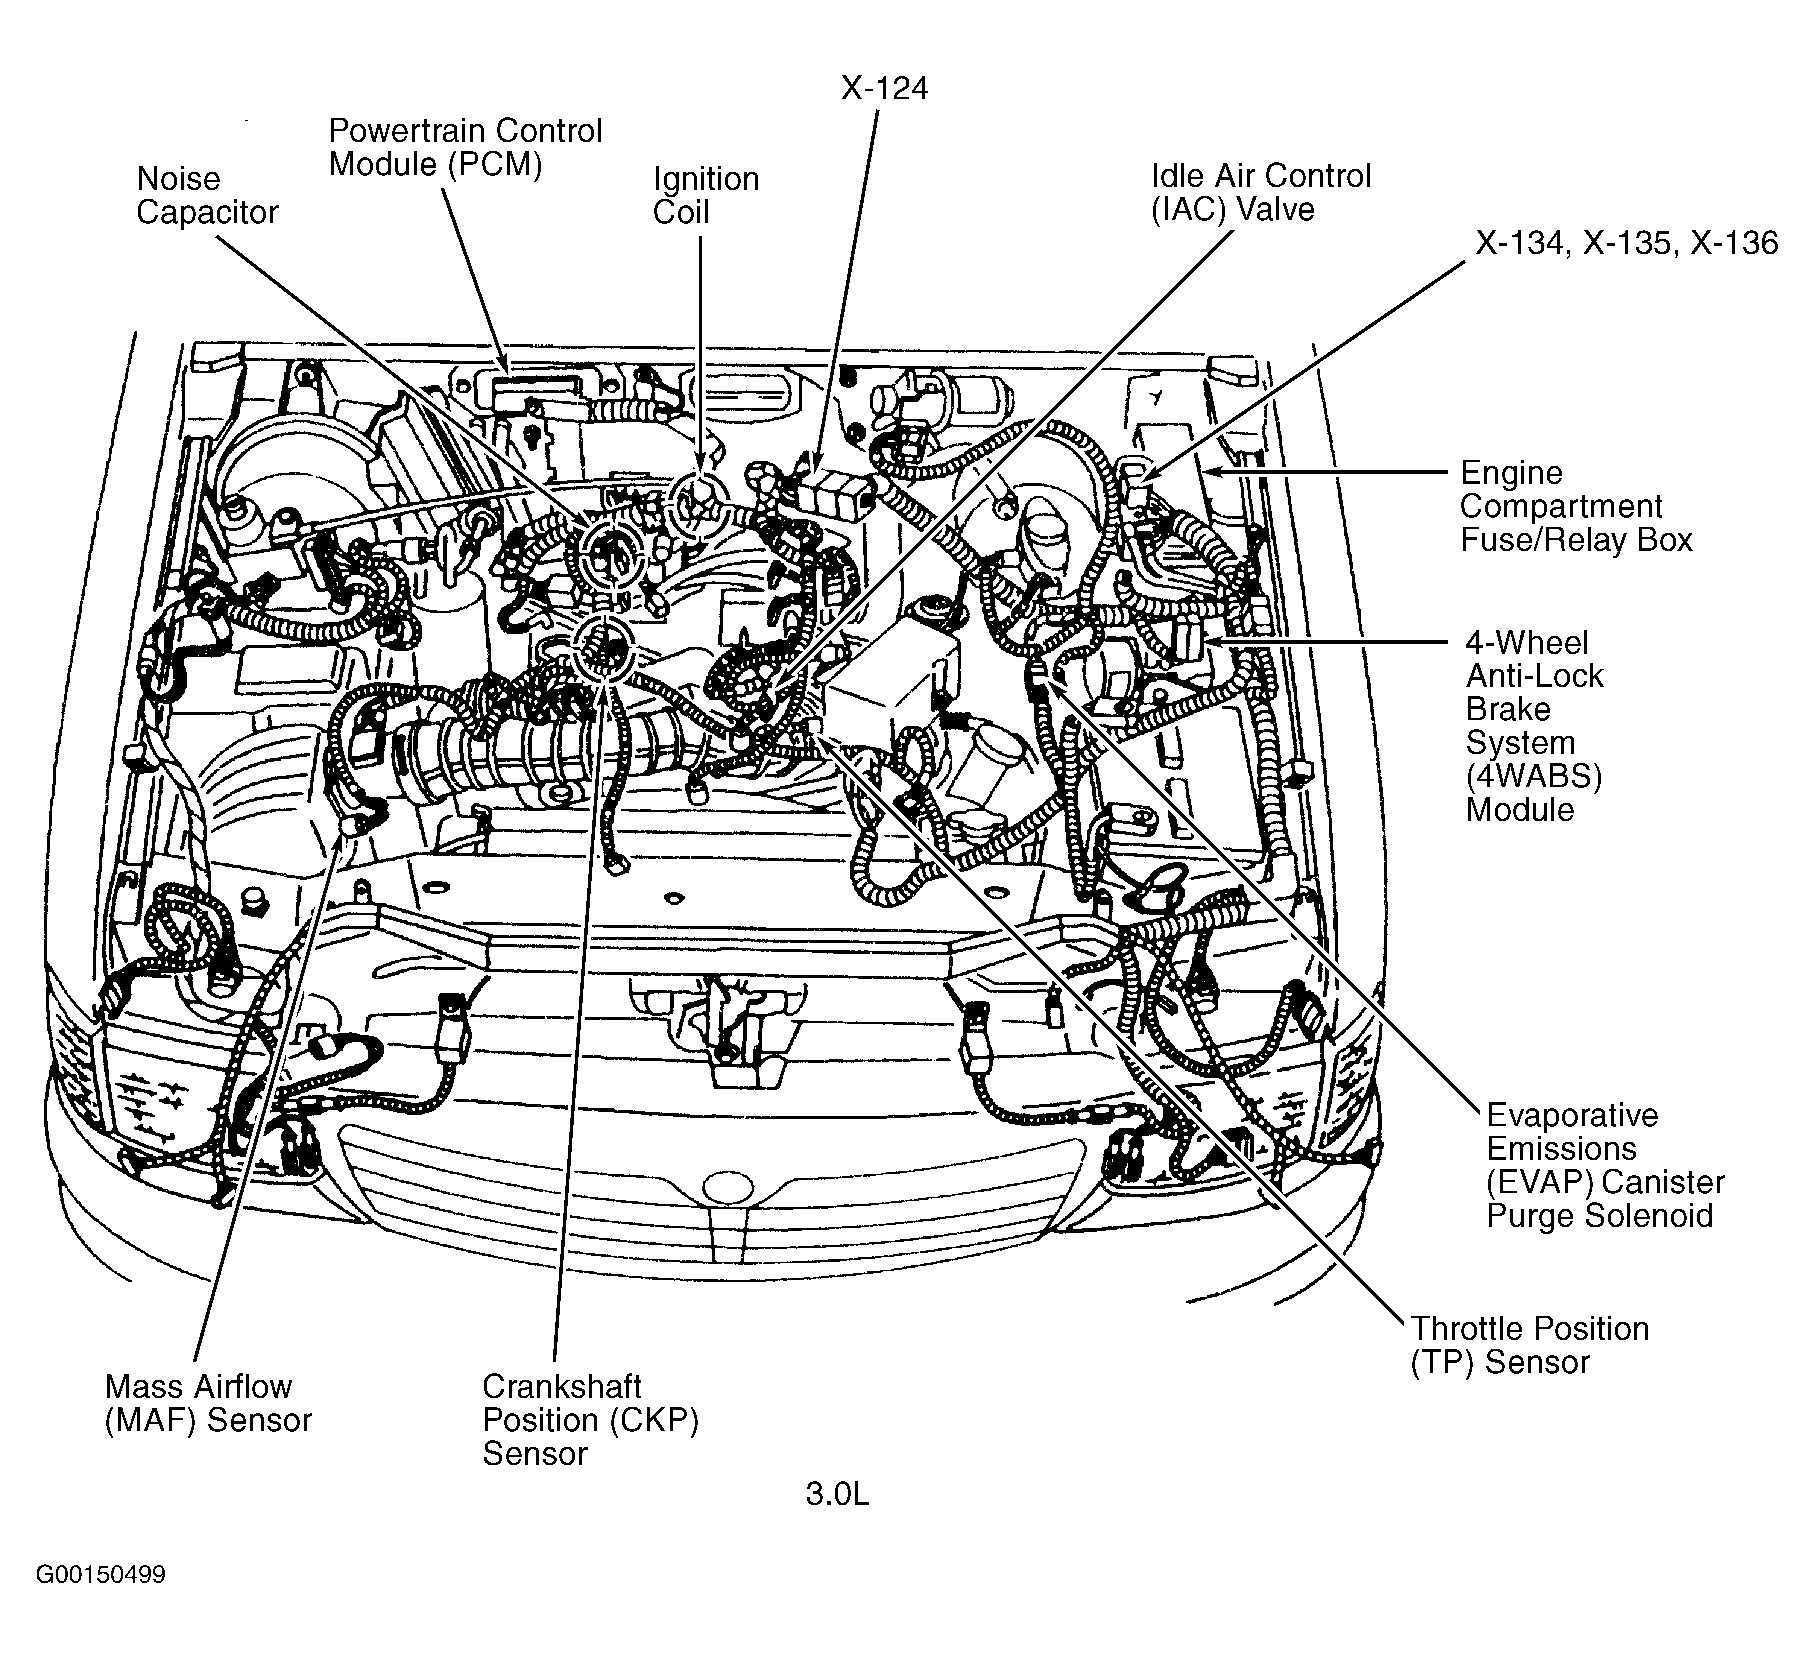 2003 Chevy Cavalier Engine Diagram Diagram Chevy Cavalier 3 1 Engine Just Wiring Diagram Of 2003 Chevy Cavalier Engine Diagram